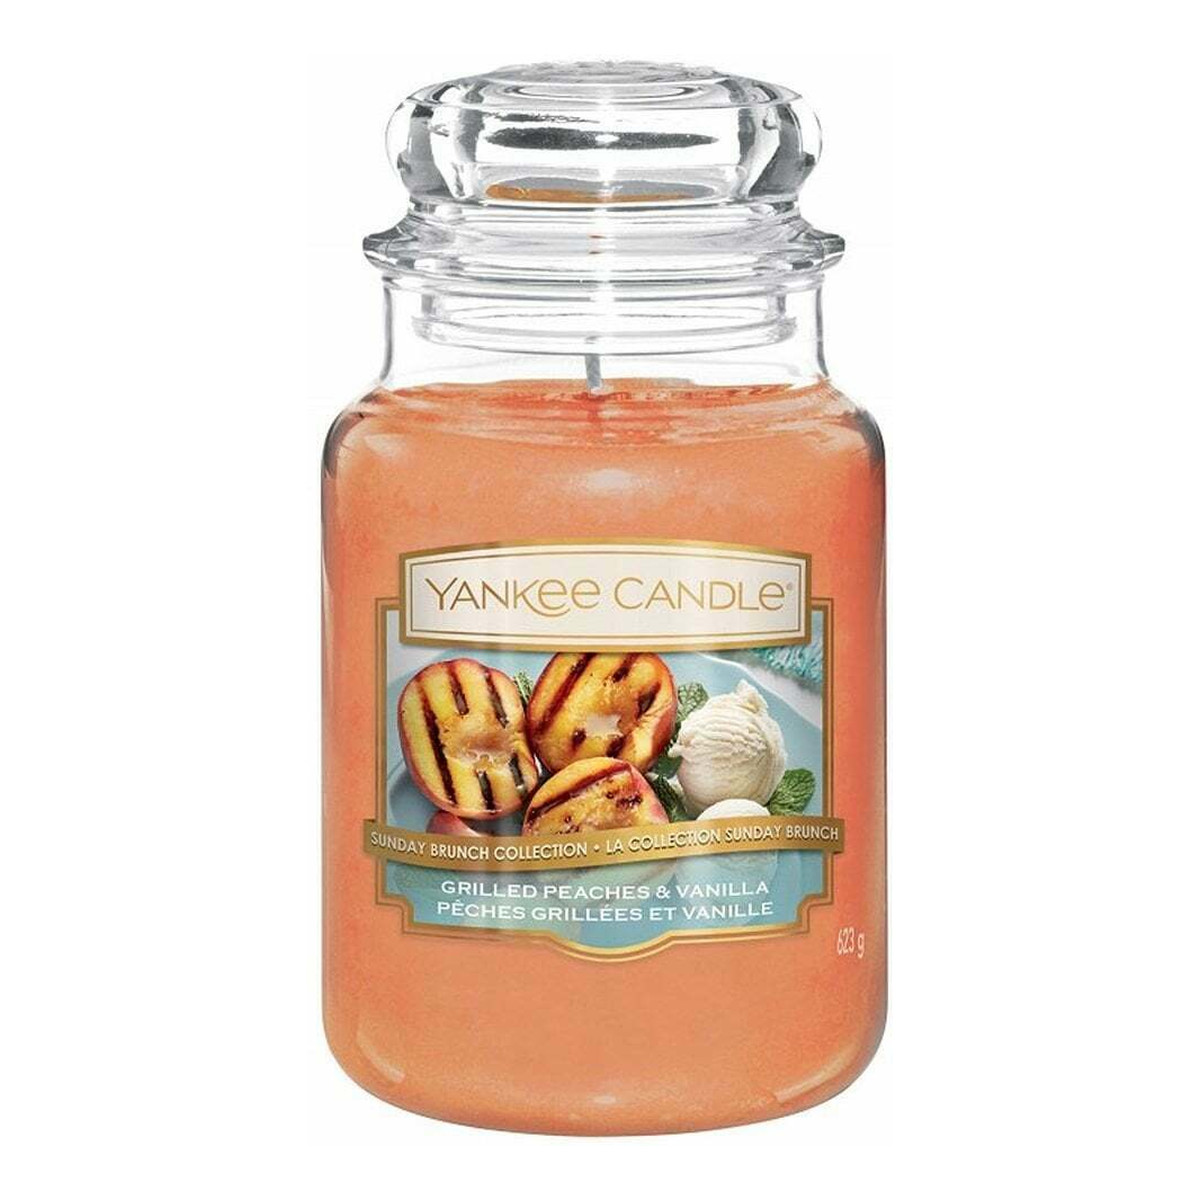 Yankee Candle Large Jar duża świeczka zapachowa Grilled Peaches & Vanilla 623g